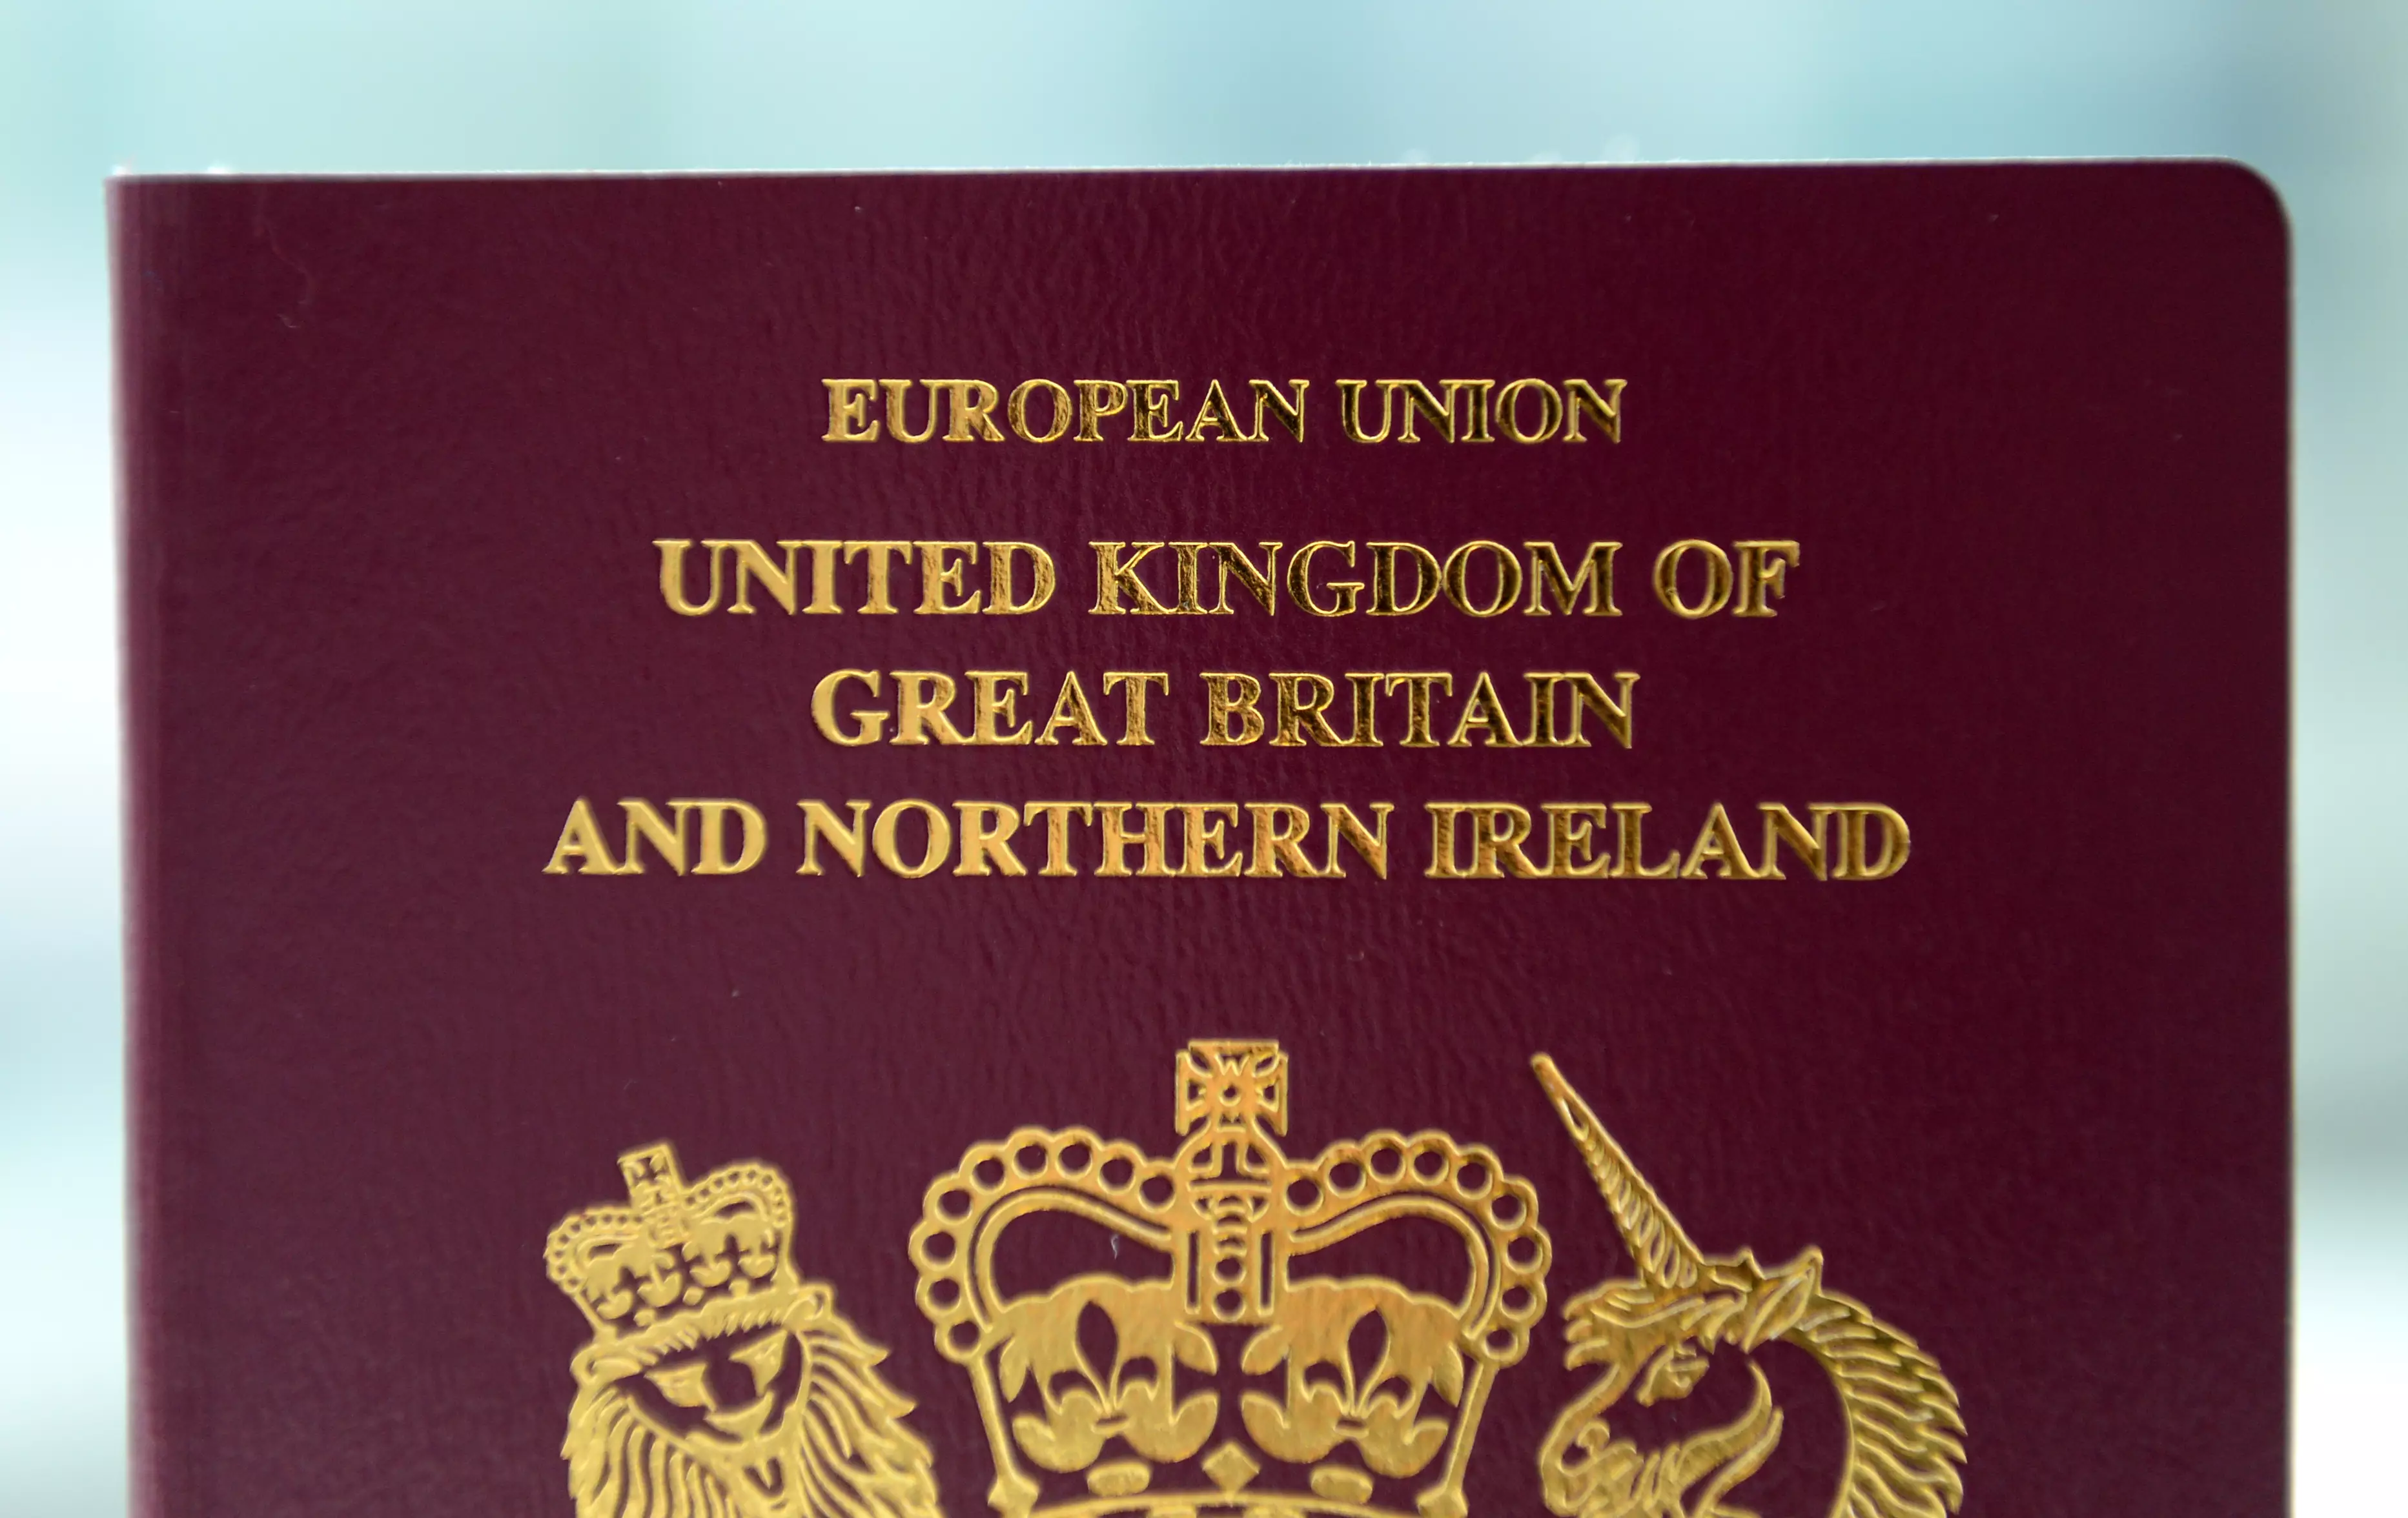 See EU later, burgundy passports.